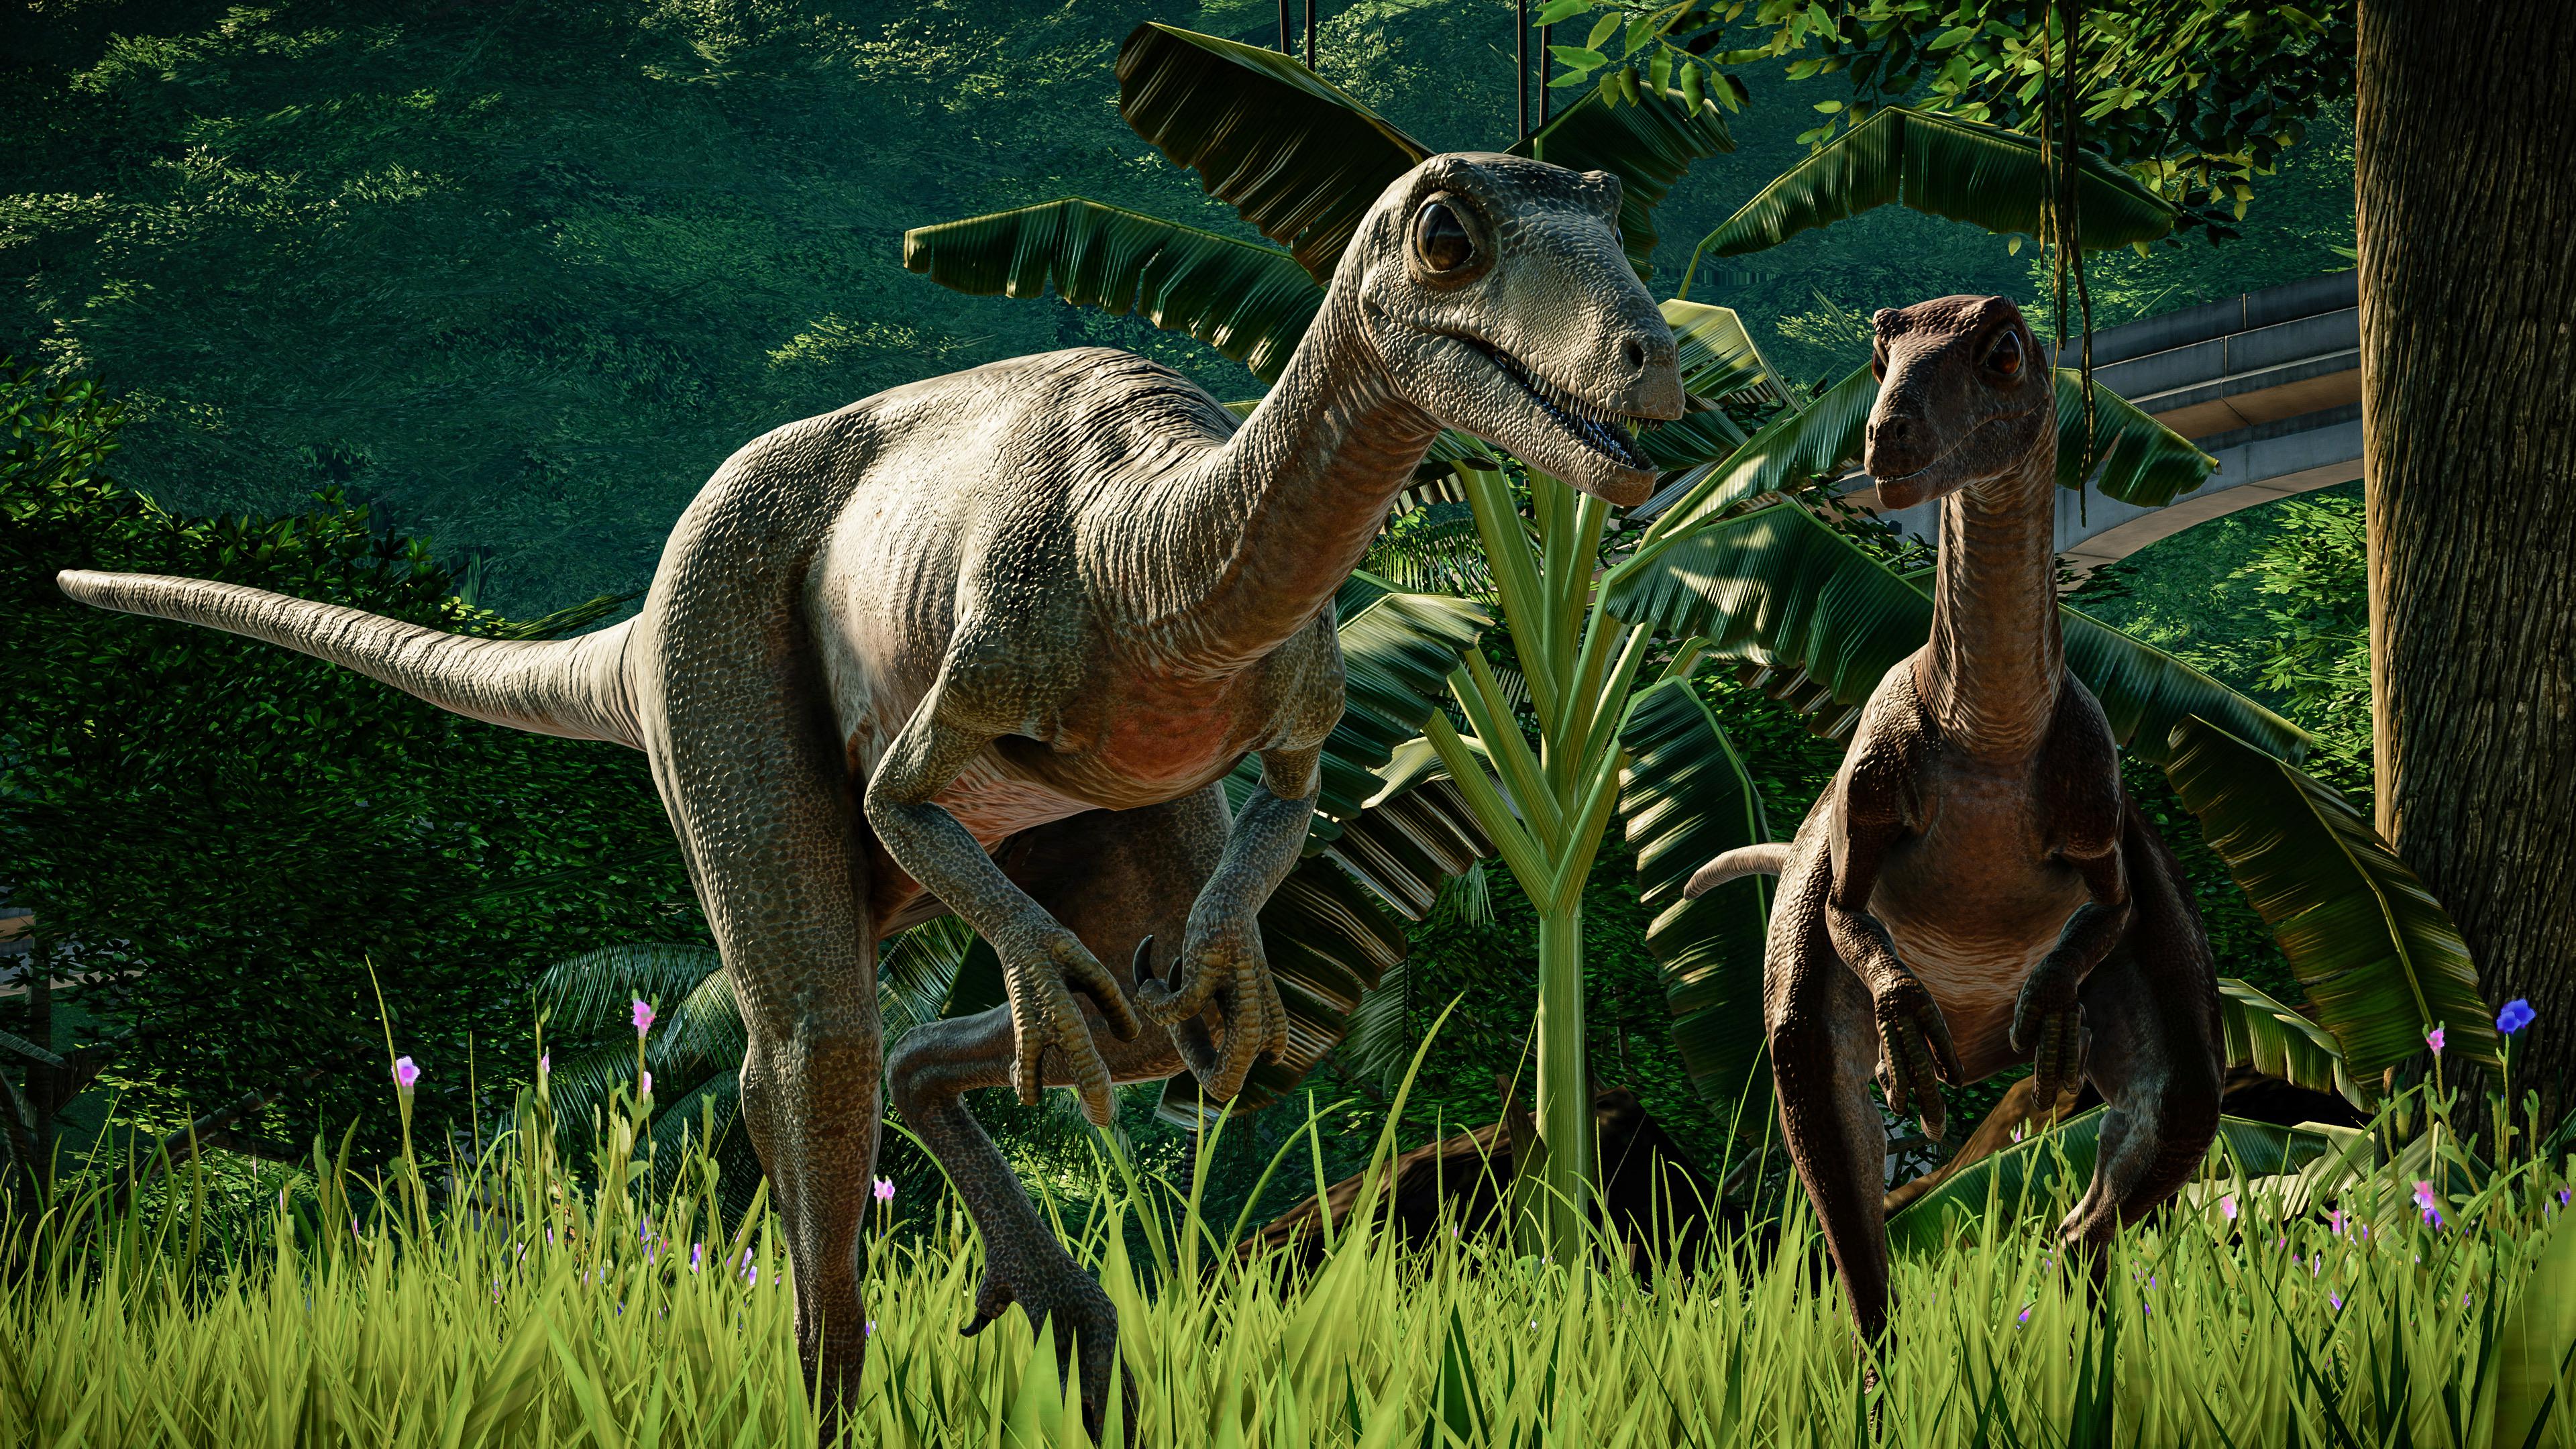 iguanodon jurassic world evolution